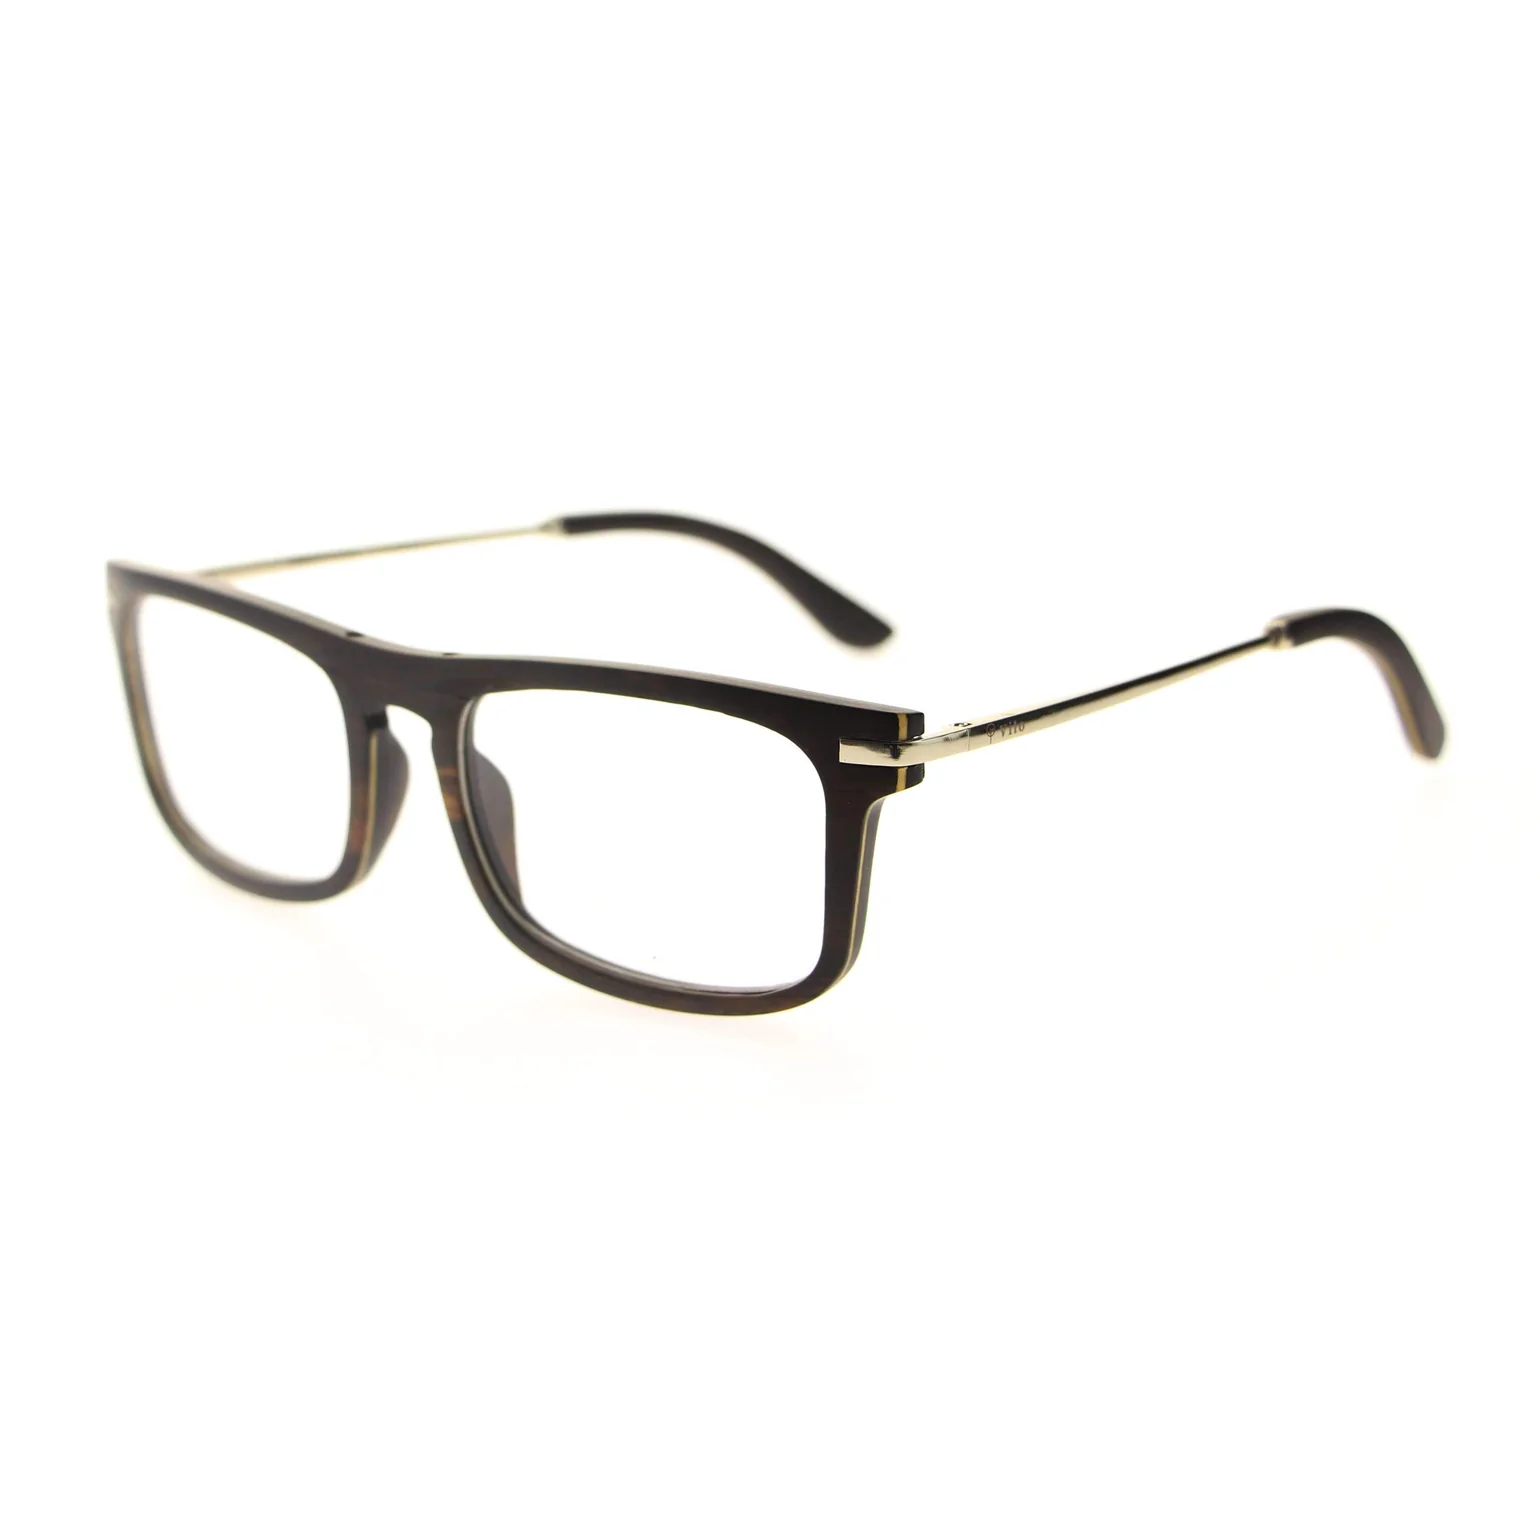 Optical Wooden Glasses - Clark